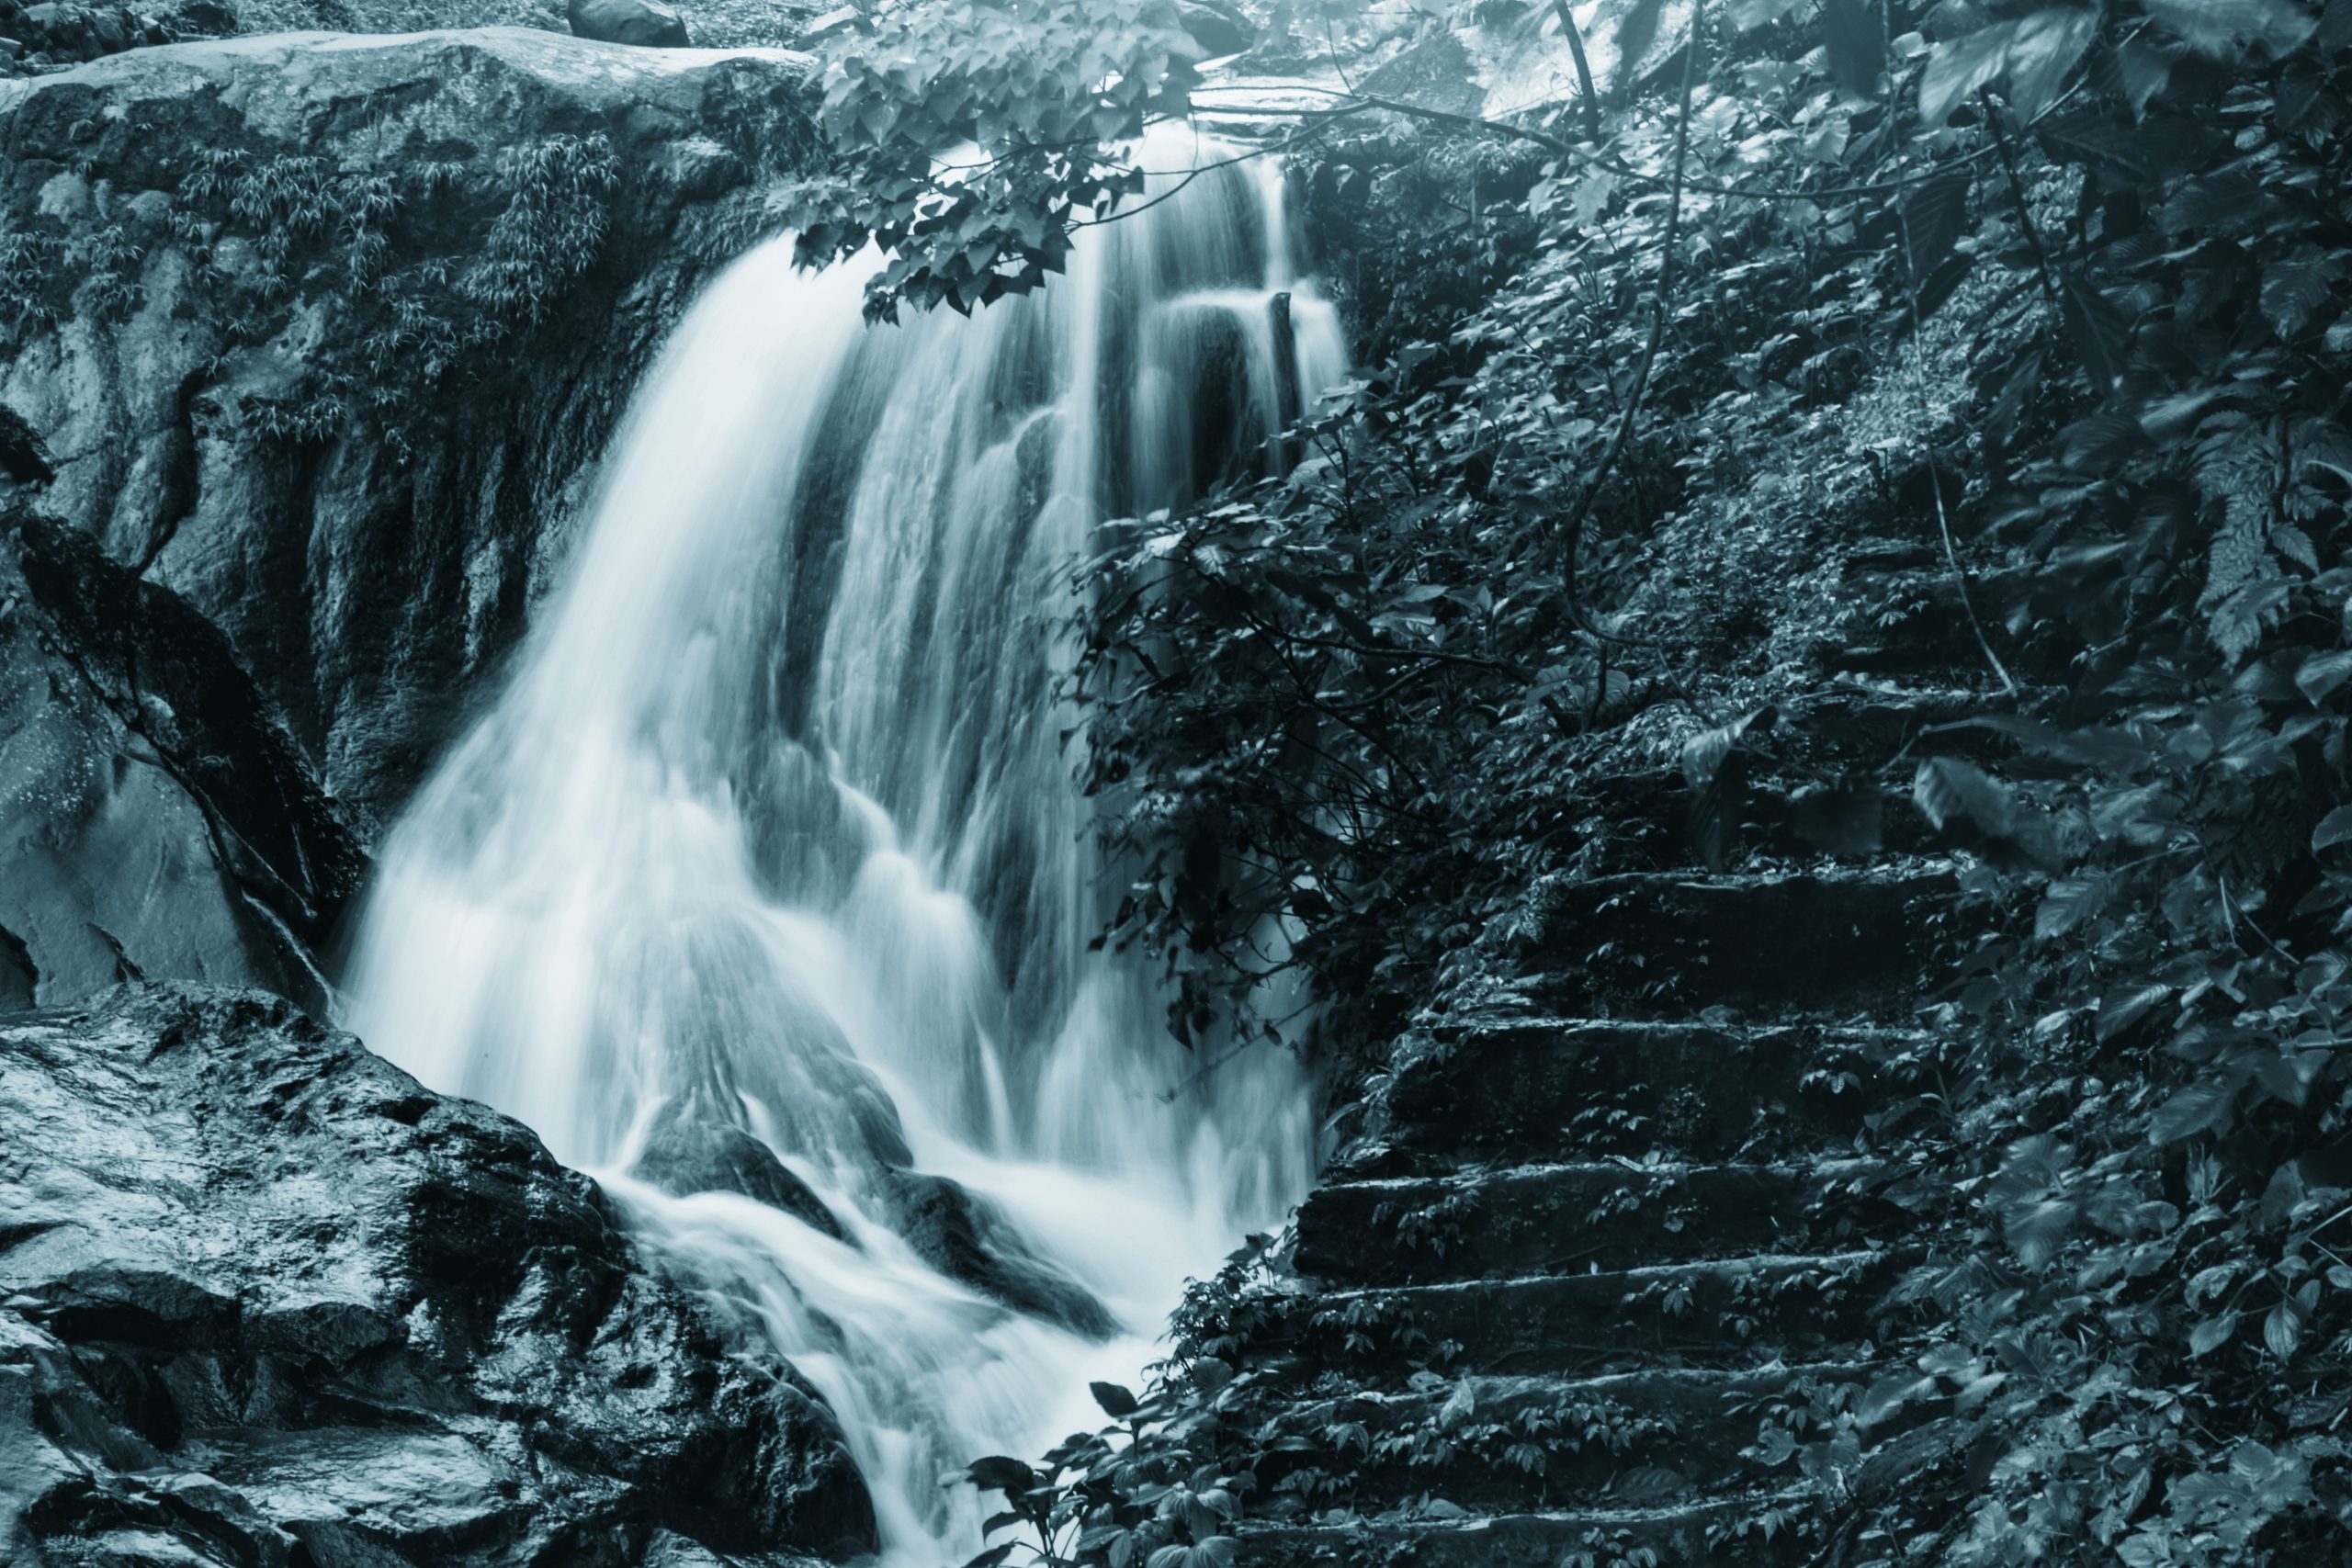 An image of a waterfall. Depositphotos.